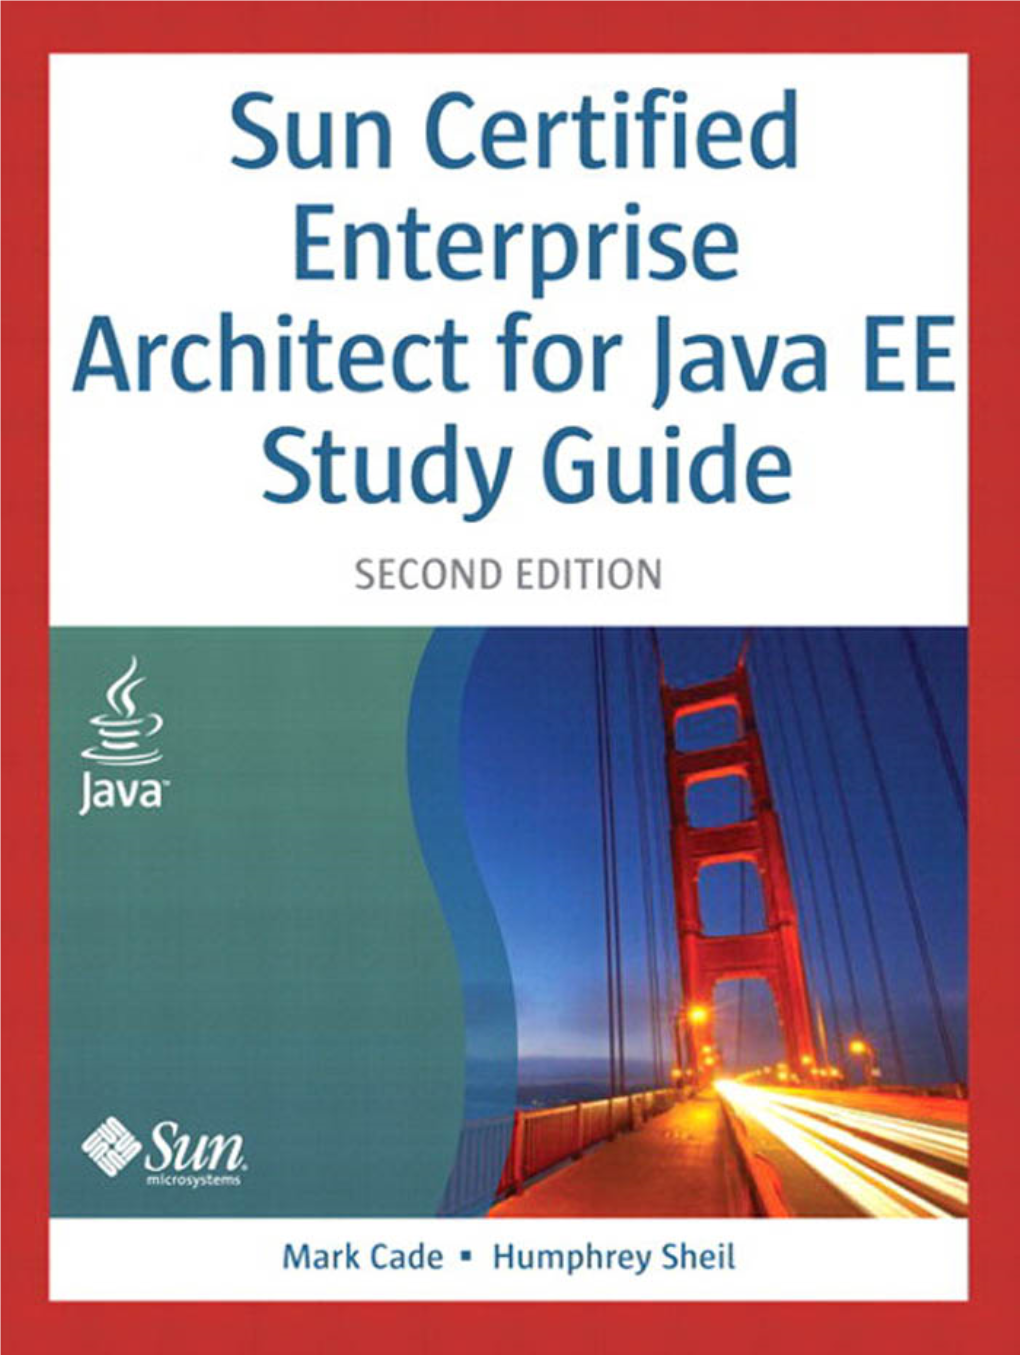 Sun Certified Enterprise Architect for Java EE Study Guide / Mark Cade, Humphrey Sheil